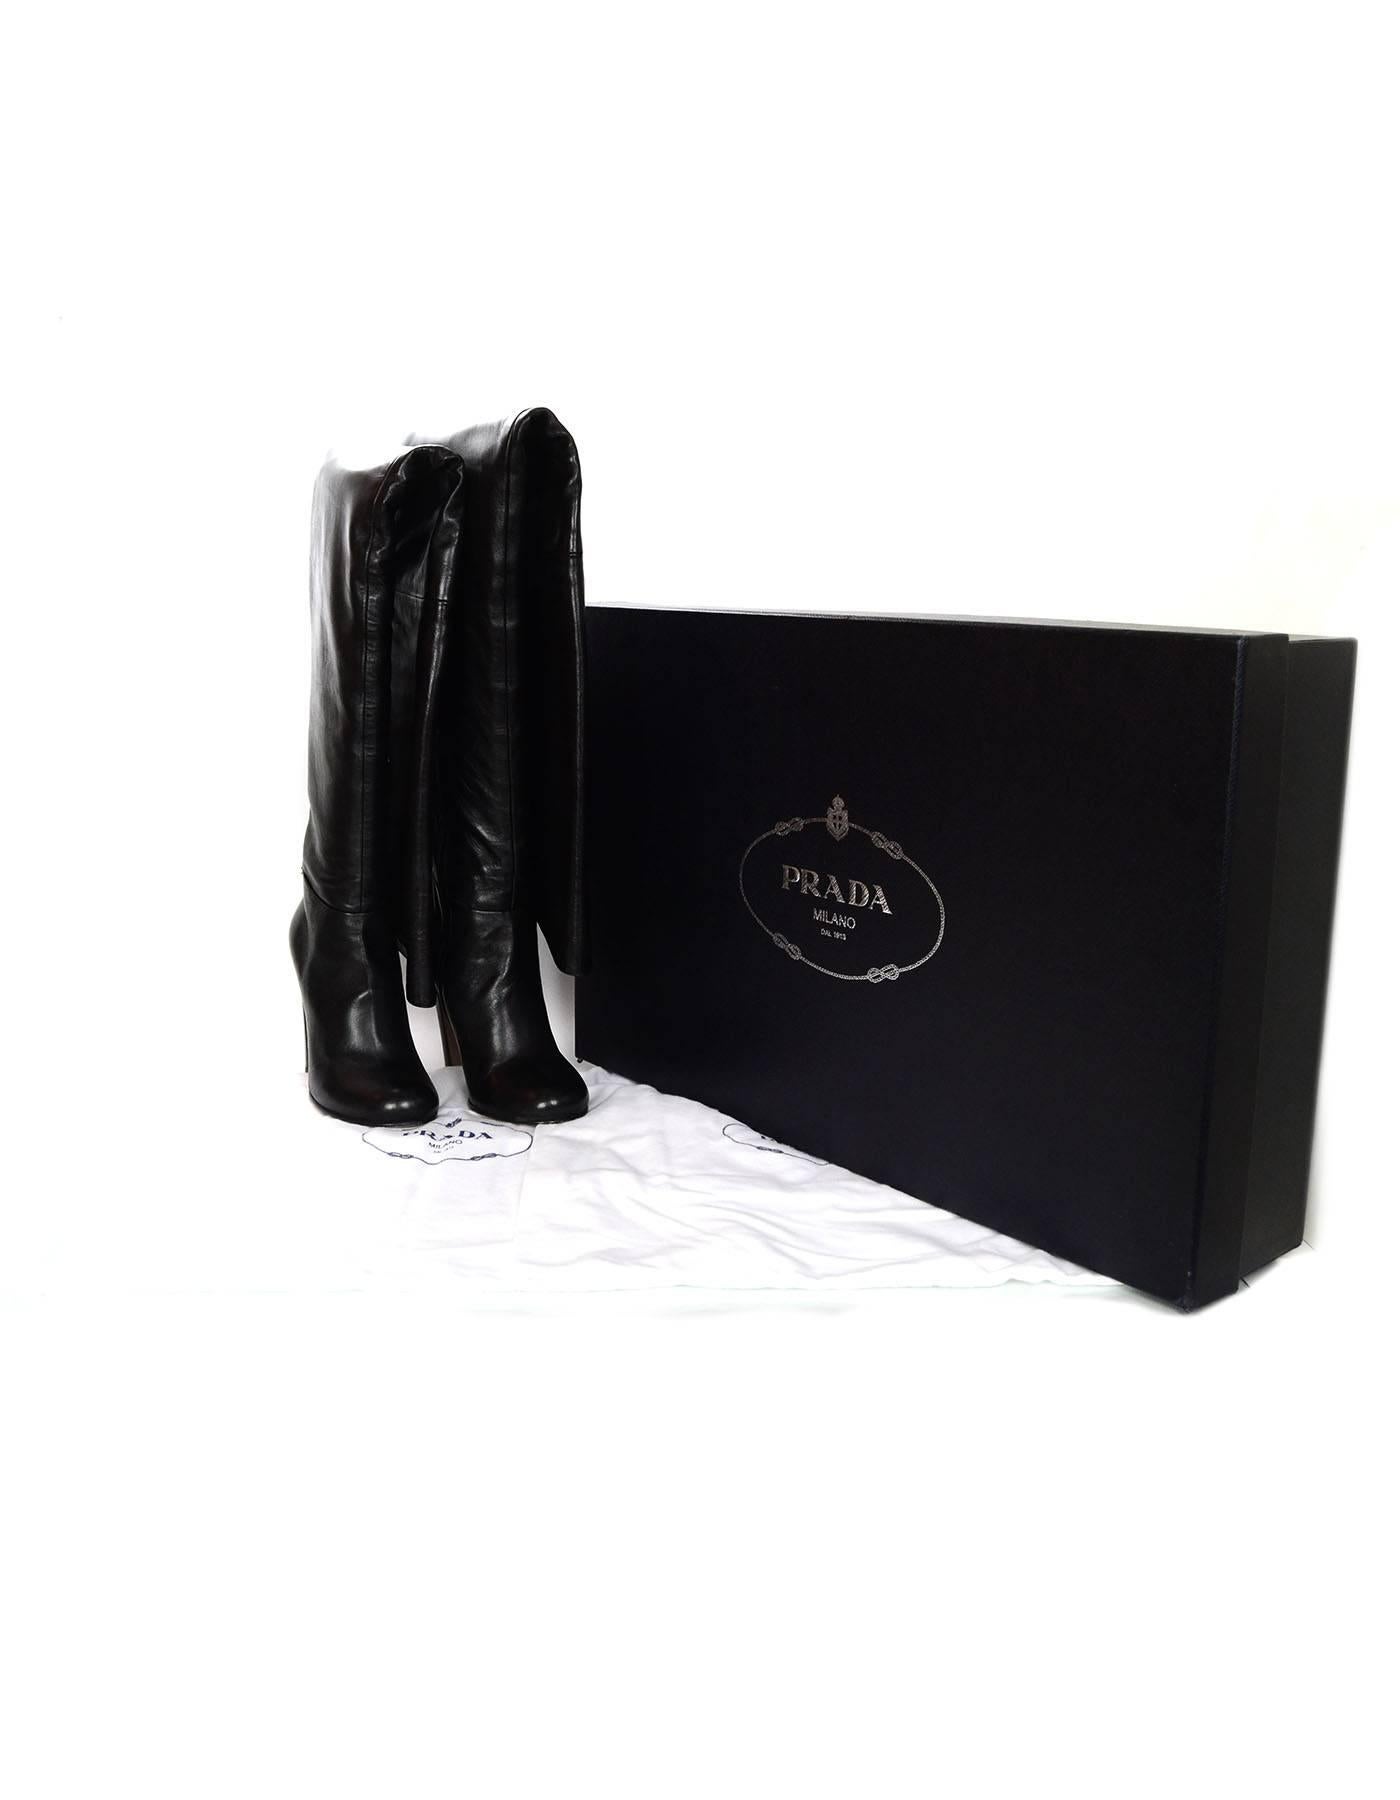 Prada Black Leather Thigh-High Heeled Boots sz 37 w/ Box 1